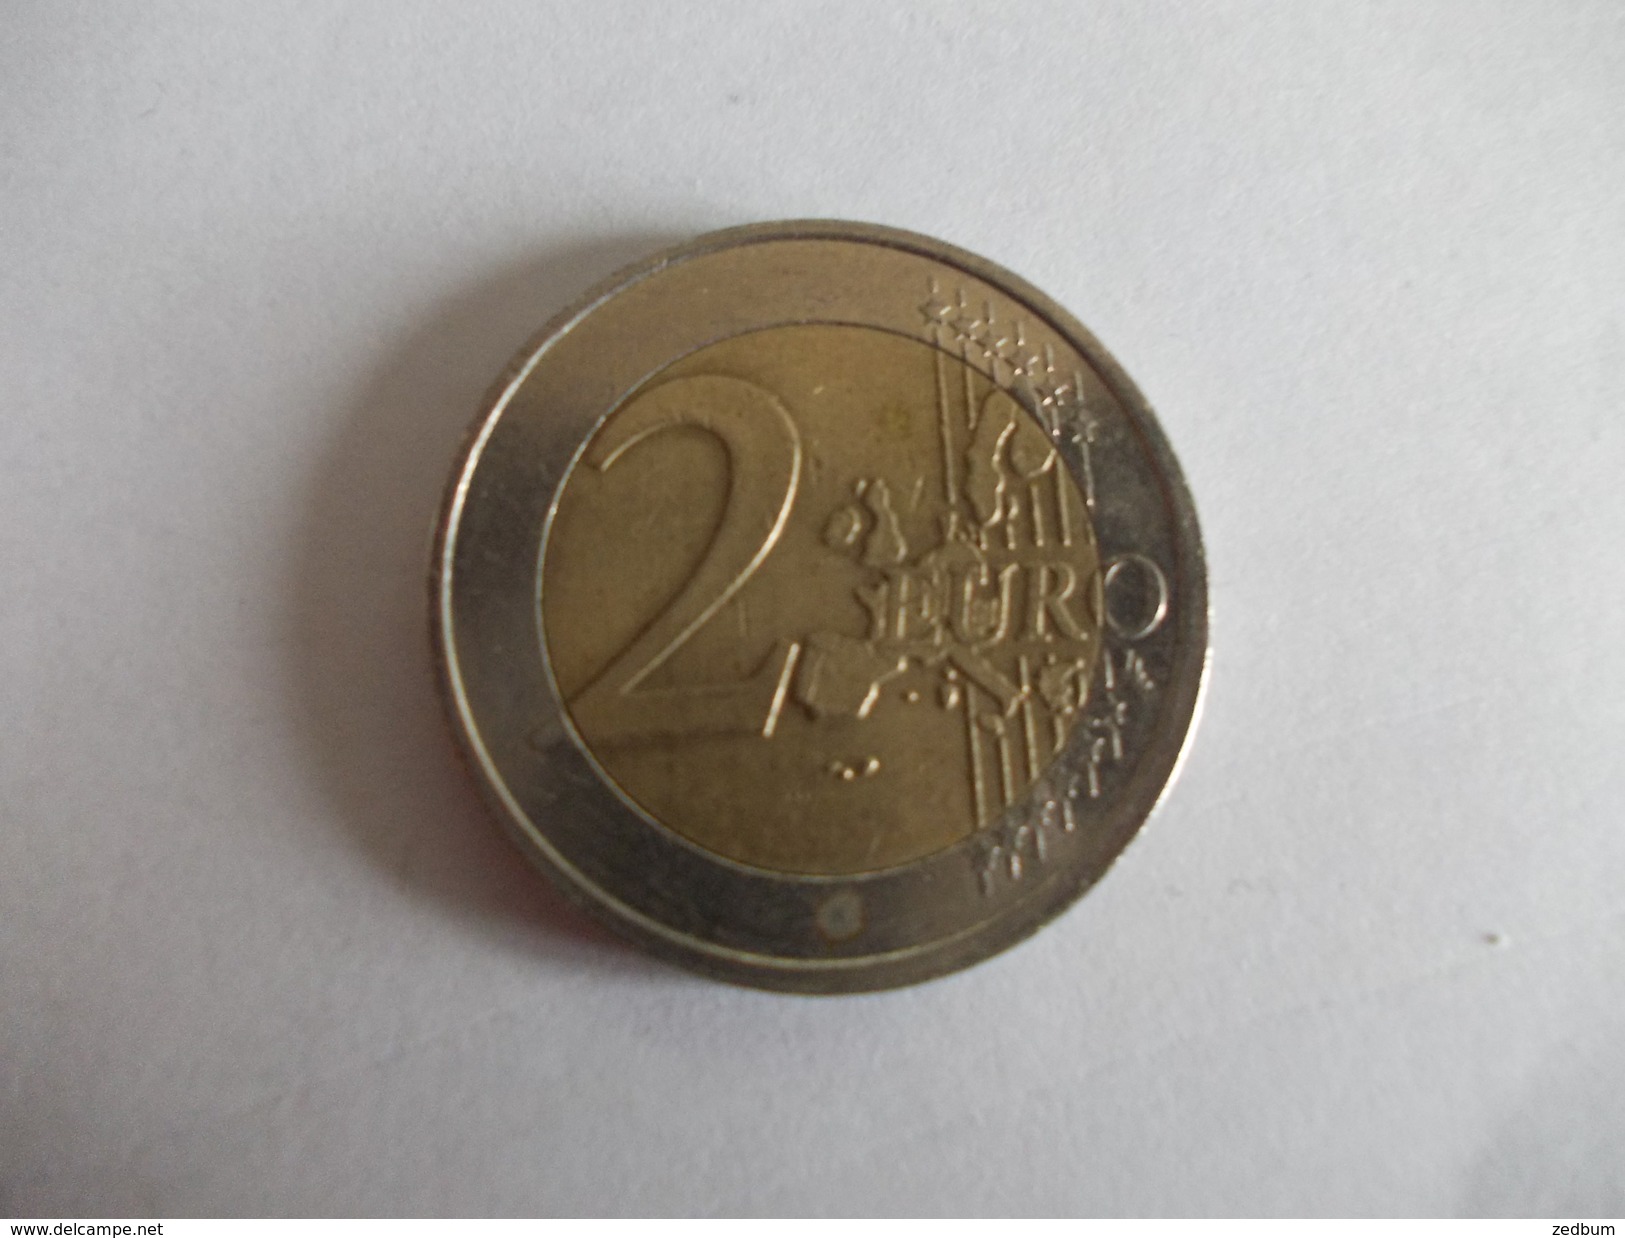 Monnaie Pièce De 2 Euros De Pays Bas Année 2002 Valeur Argus 3 &euro; - Nederland